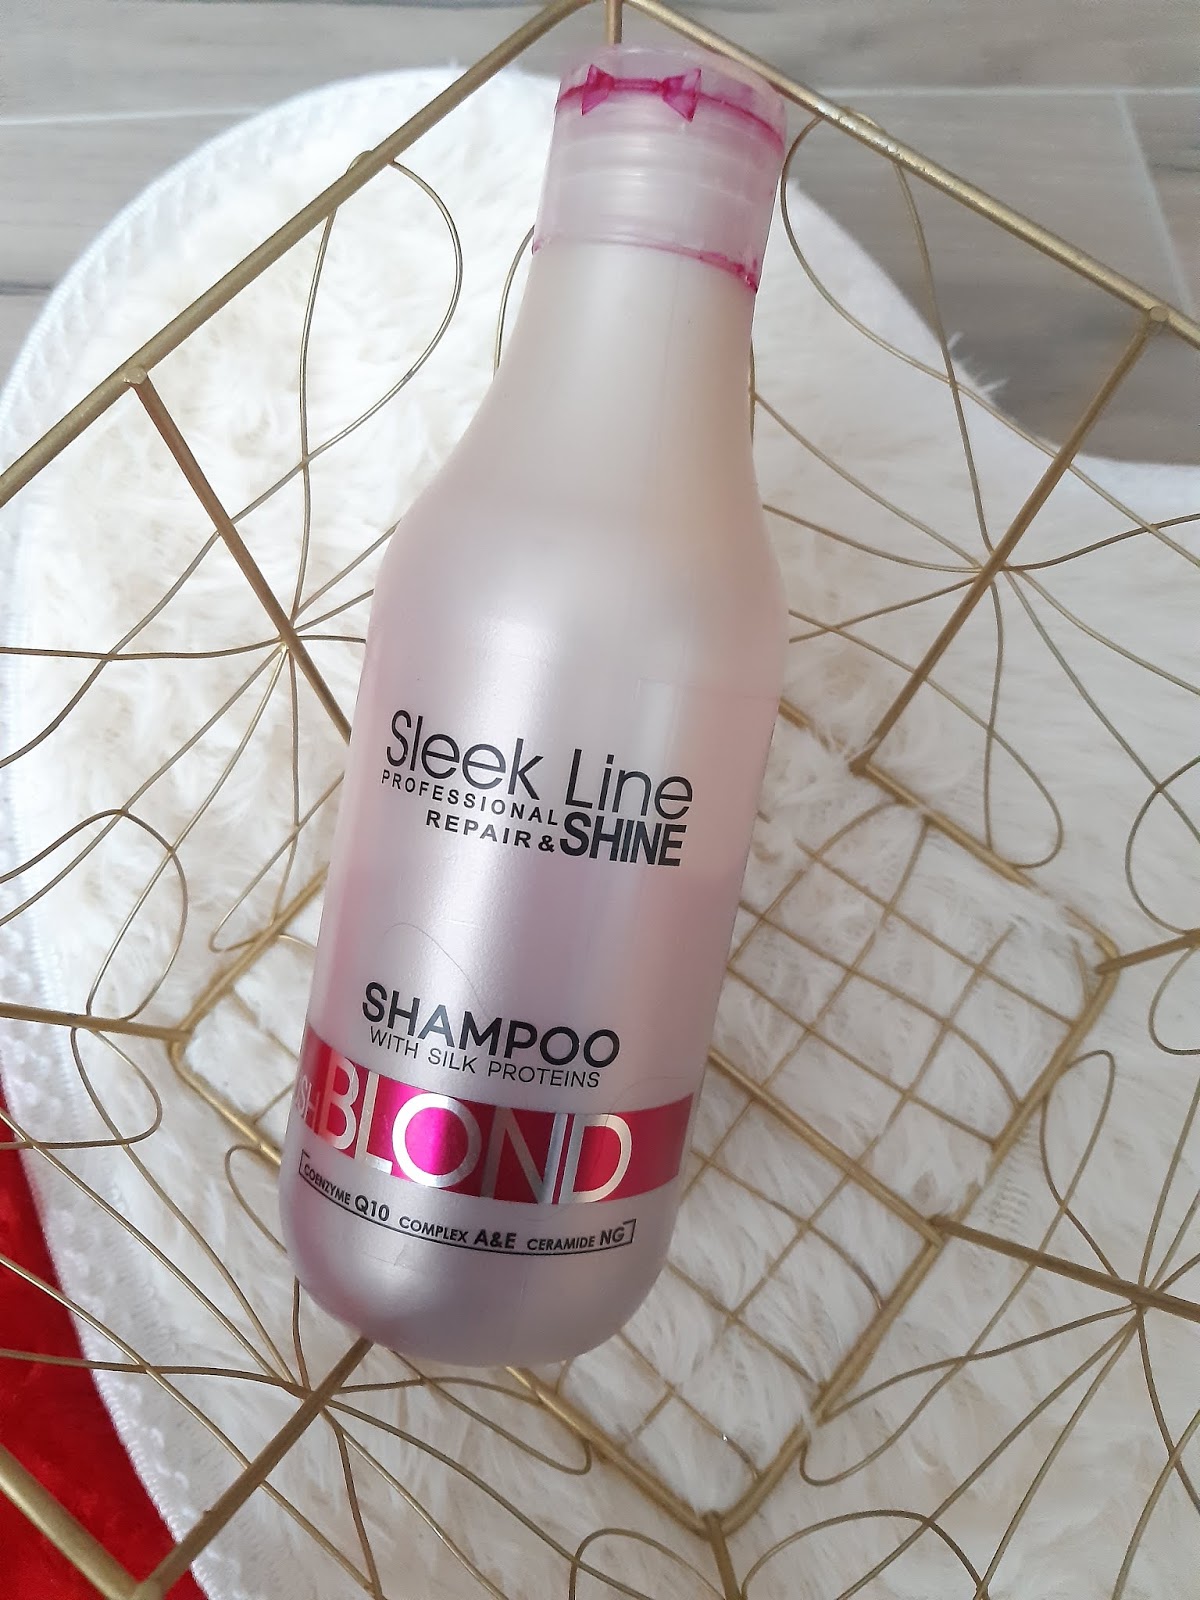 sleek line szampon blond rozowy blig